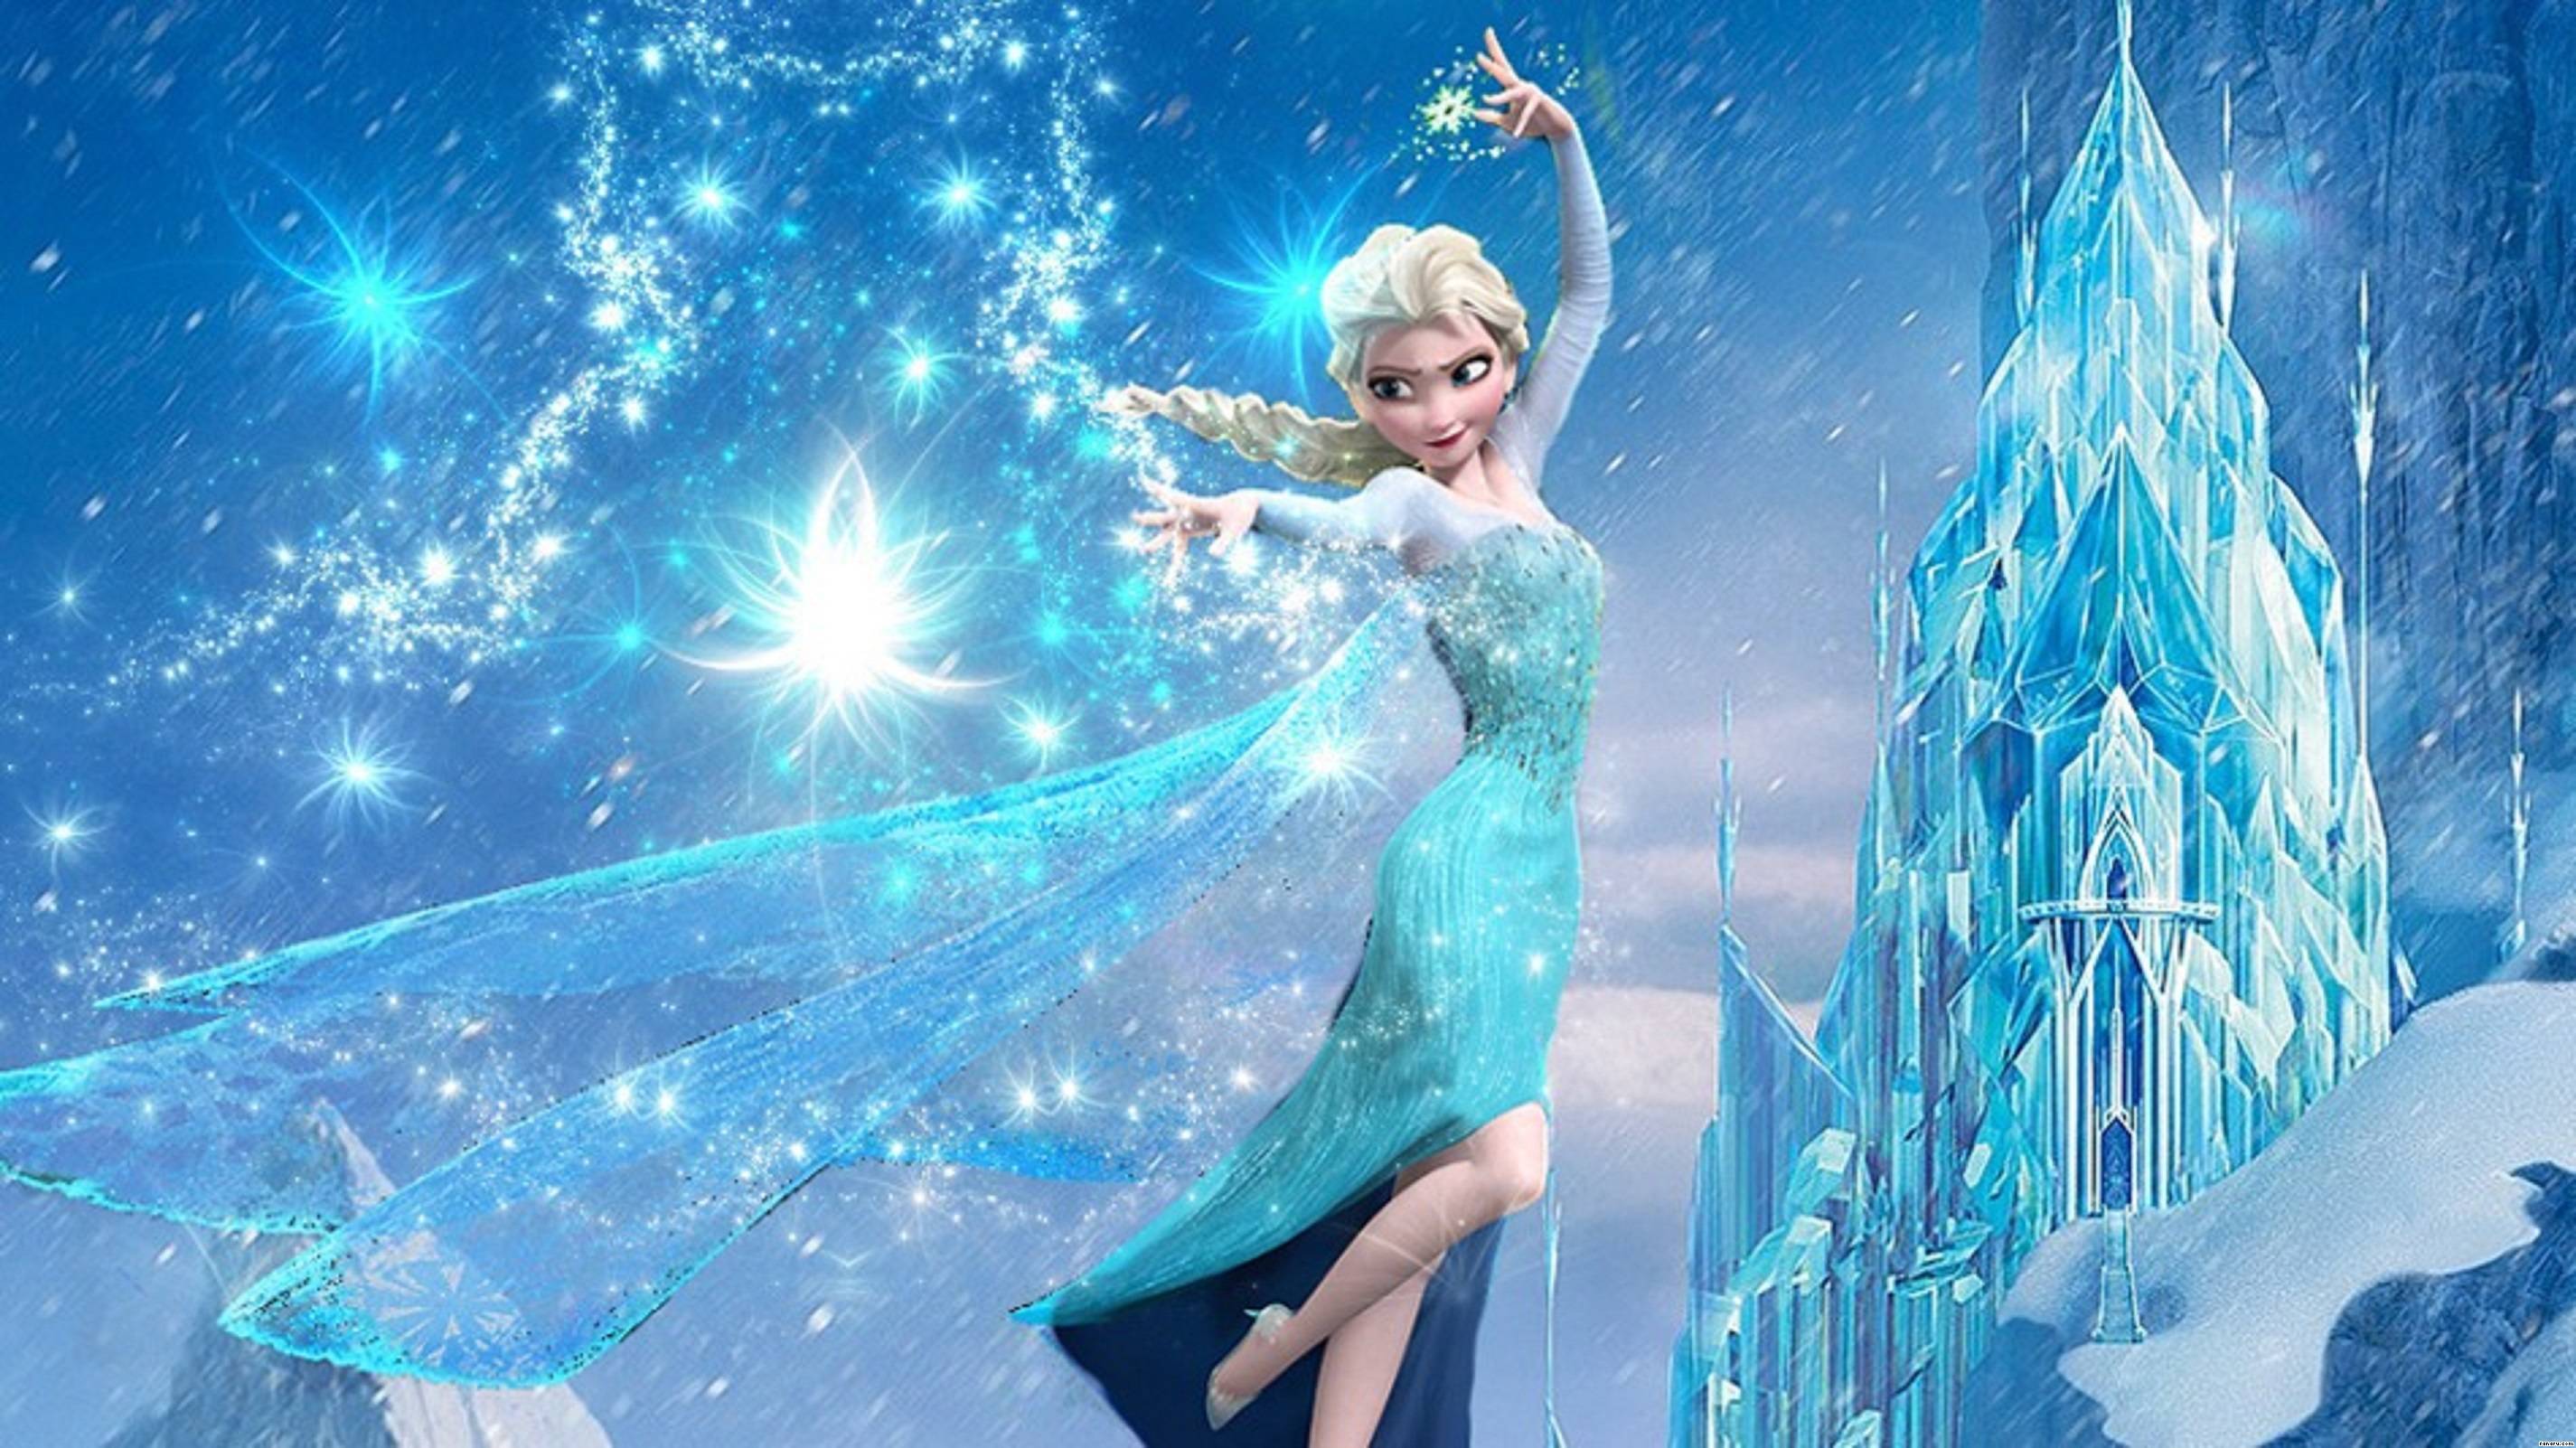 Elsa   Frozen Free Download Wallpaper 2494 Hd Wallpapers ibwallcom